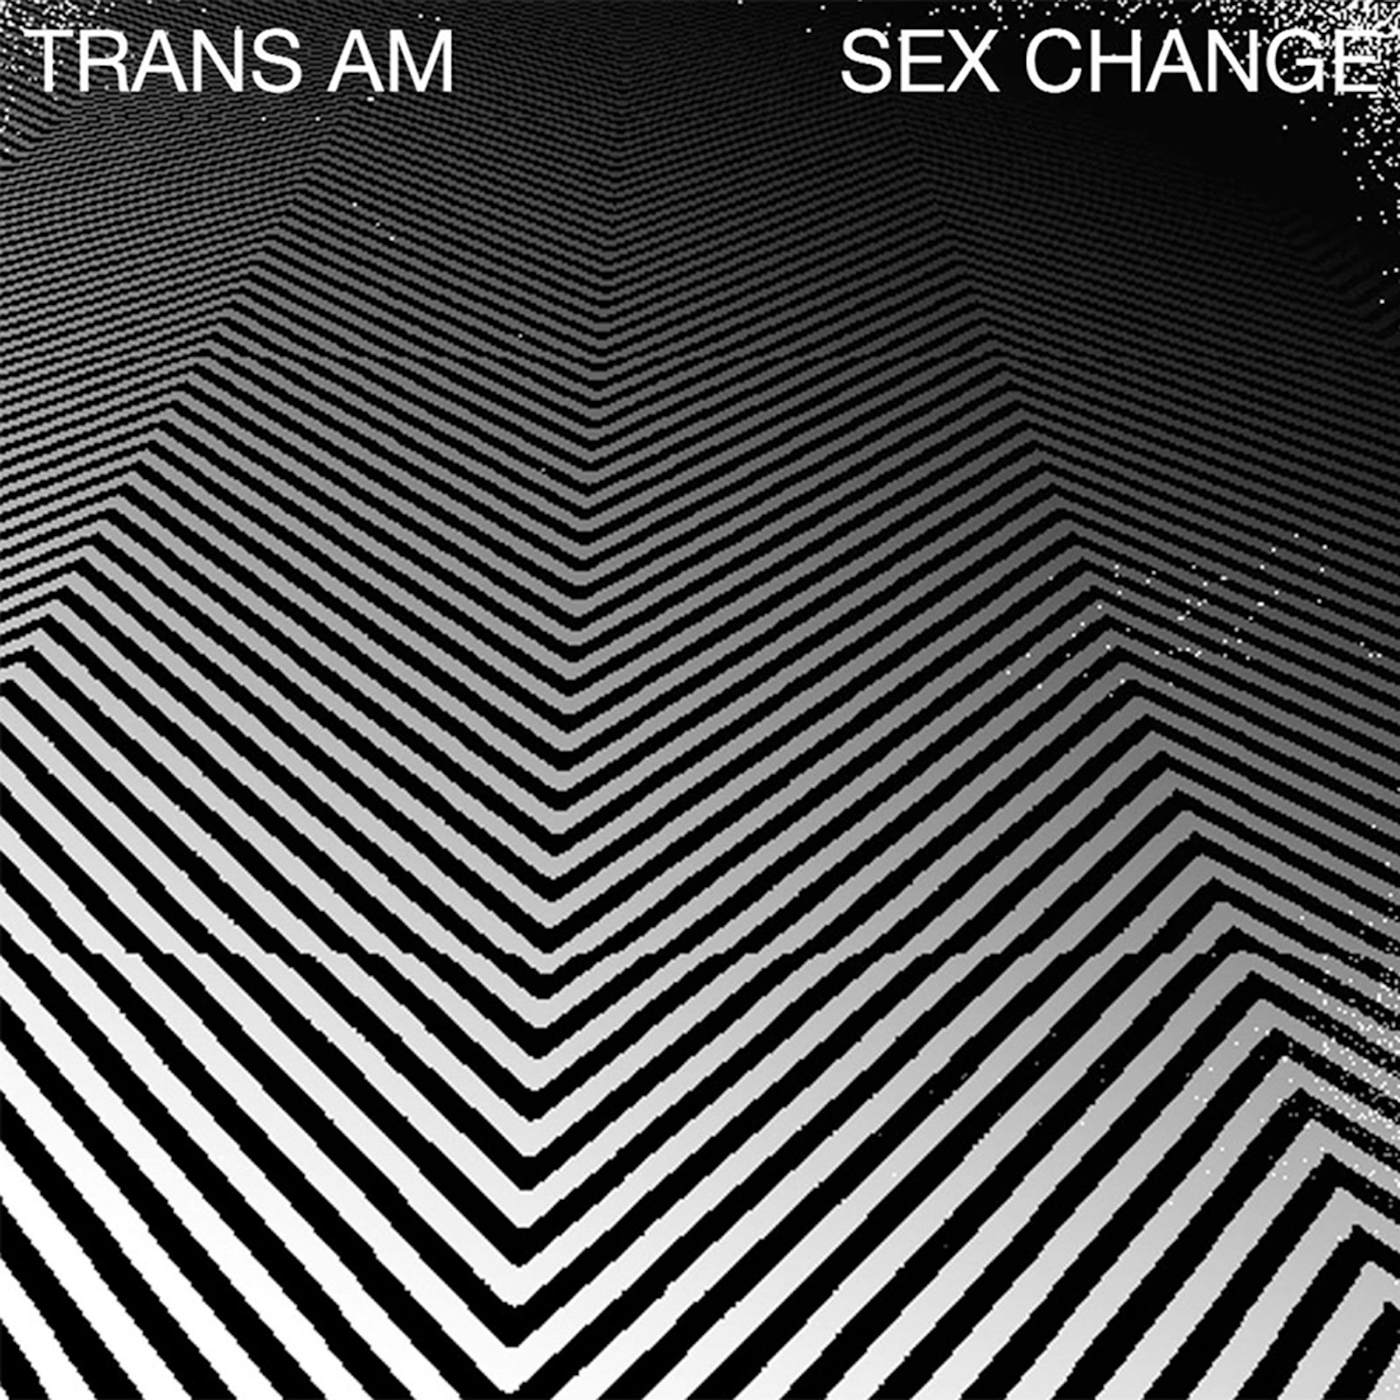 Trans Am Sex Change Vinyl Record